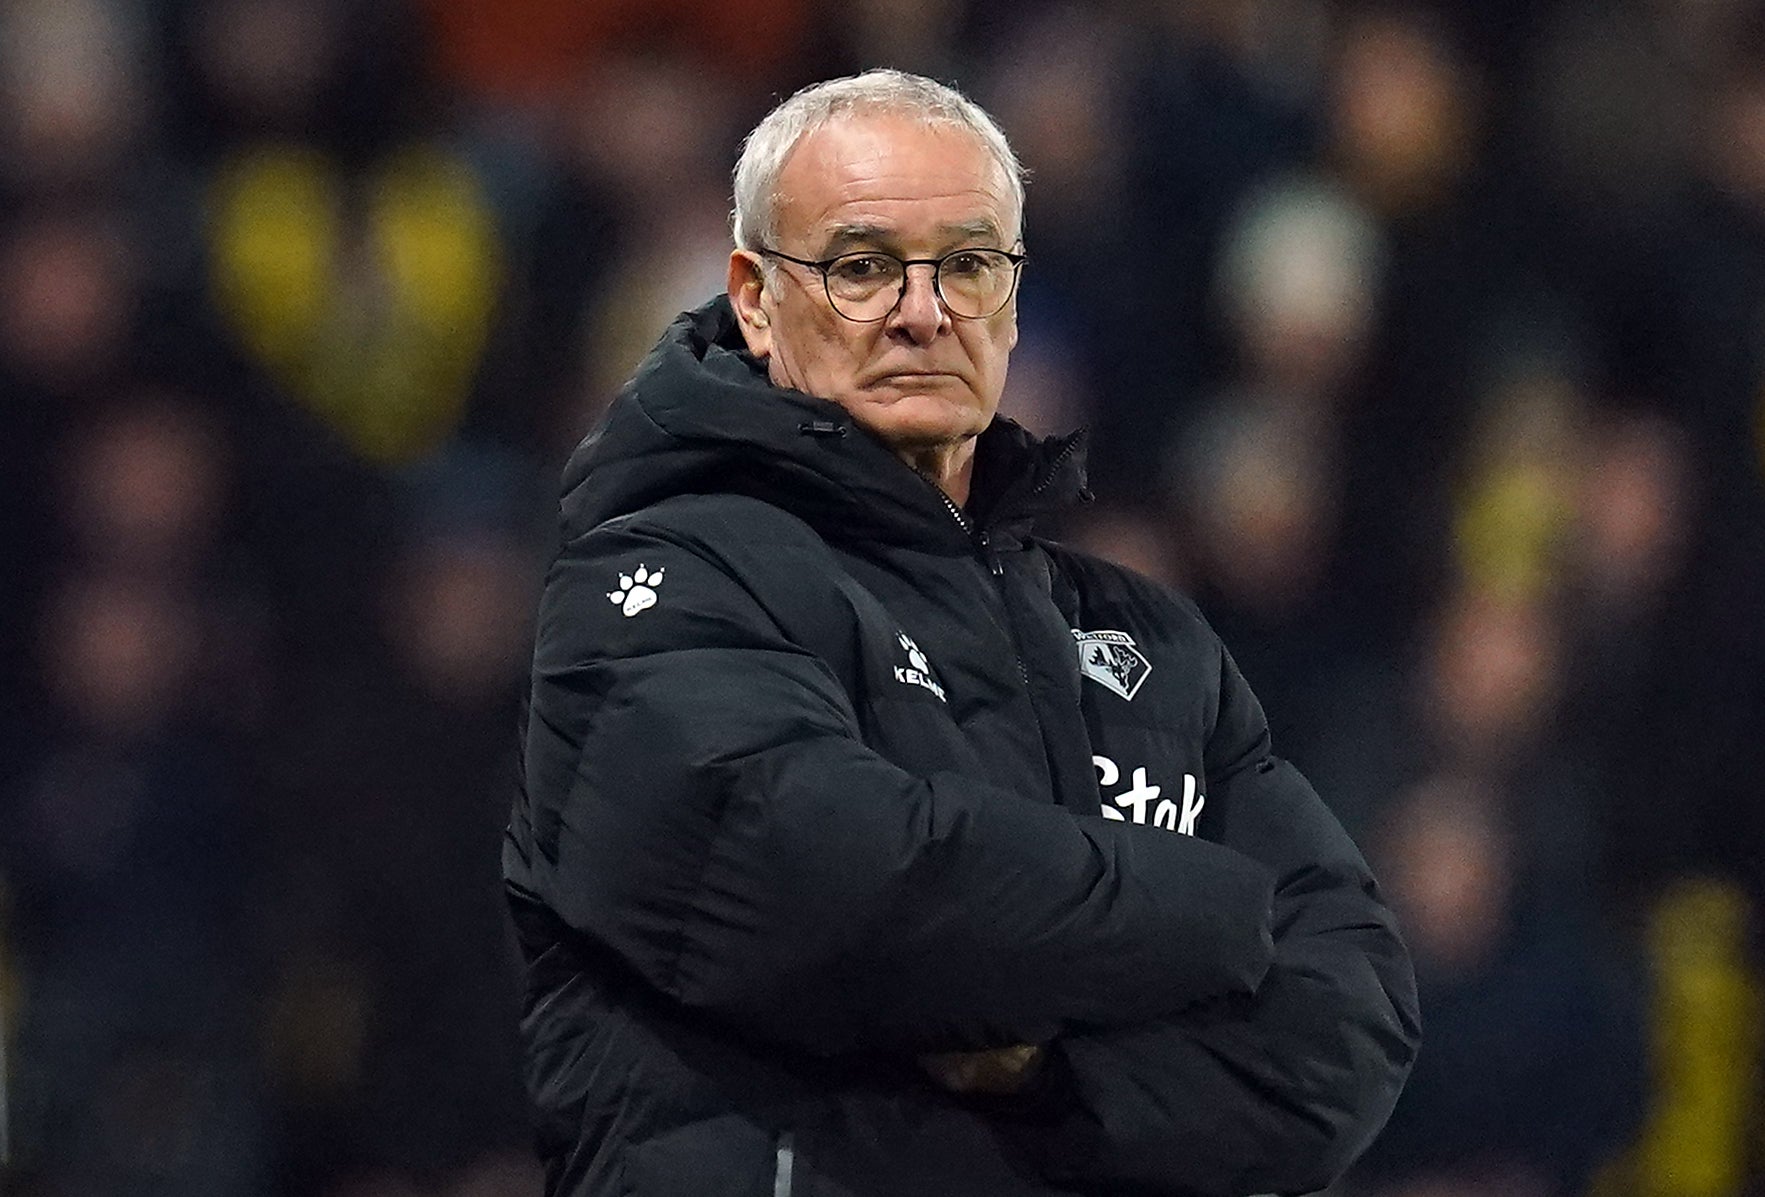 Claudio Ranieri has been sacked by Watford